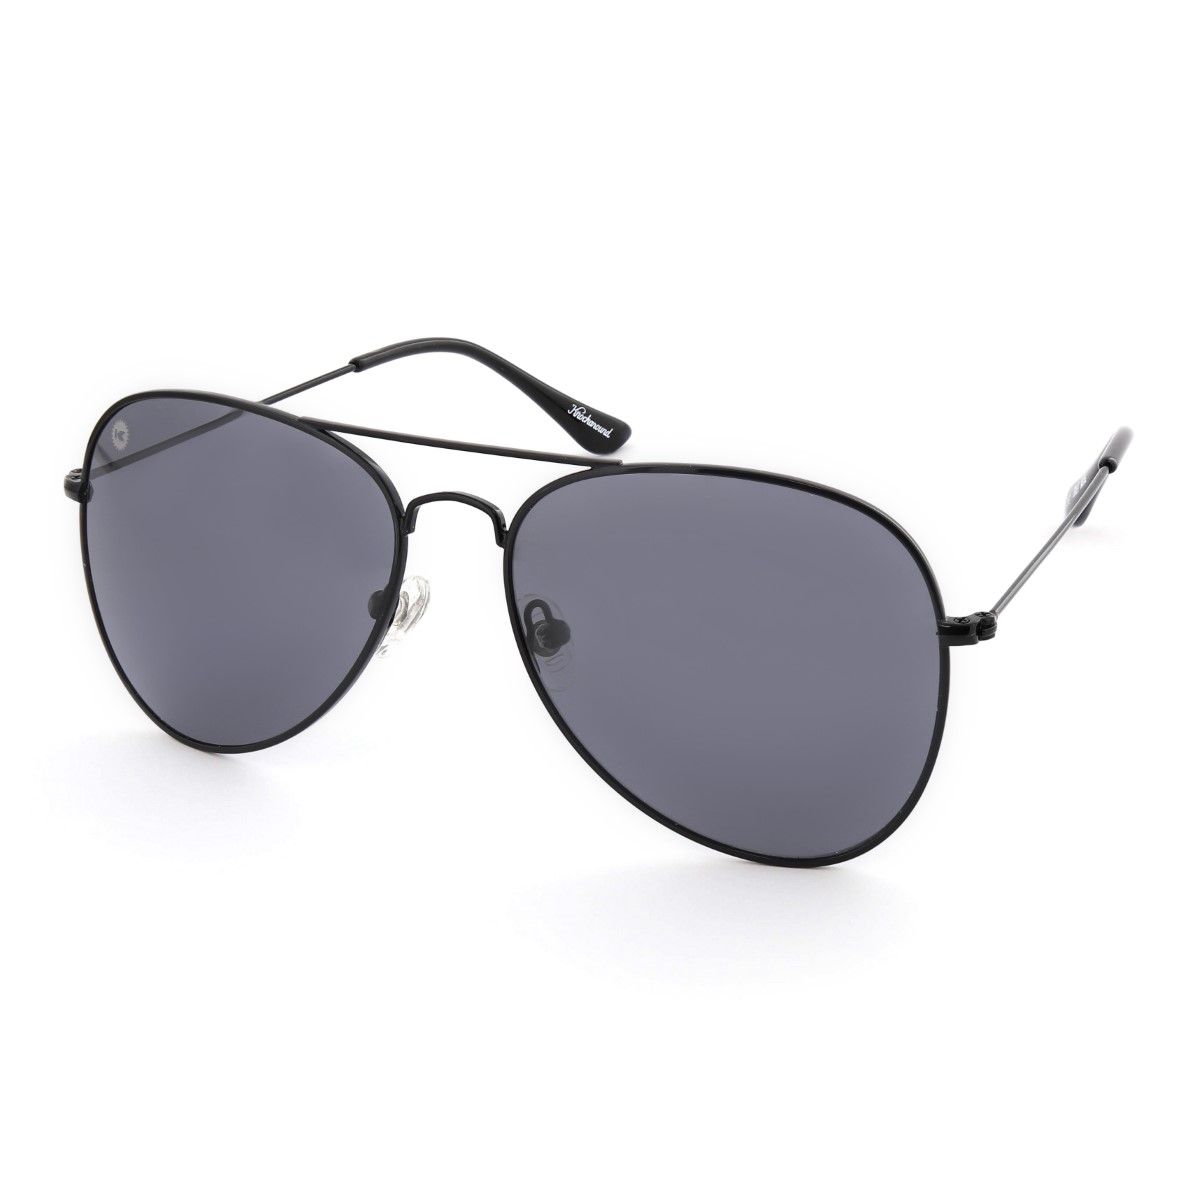 Knockaround Black/Smoke Mile Highs Unisex Sunglasses